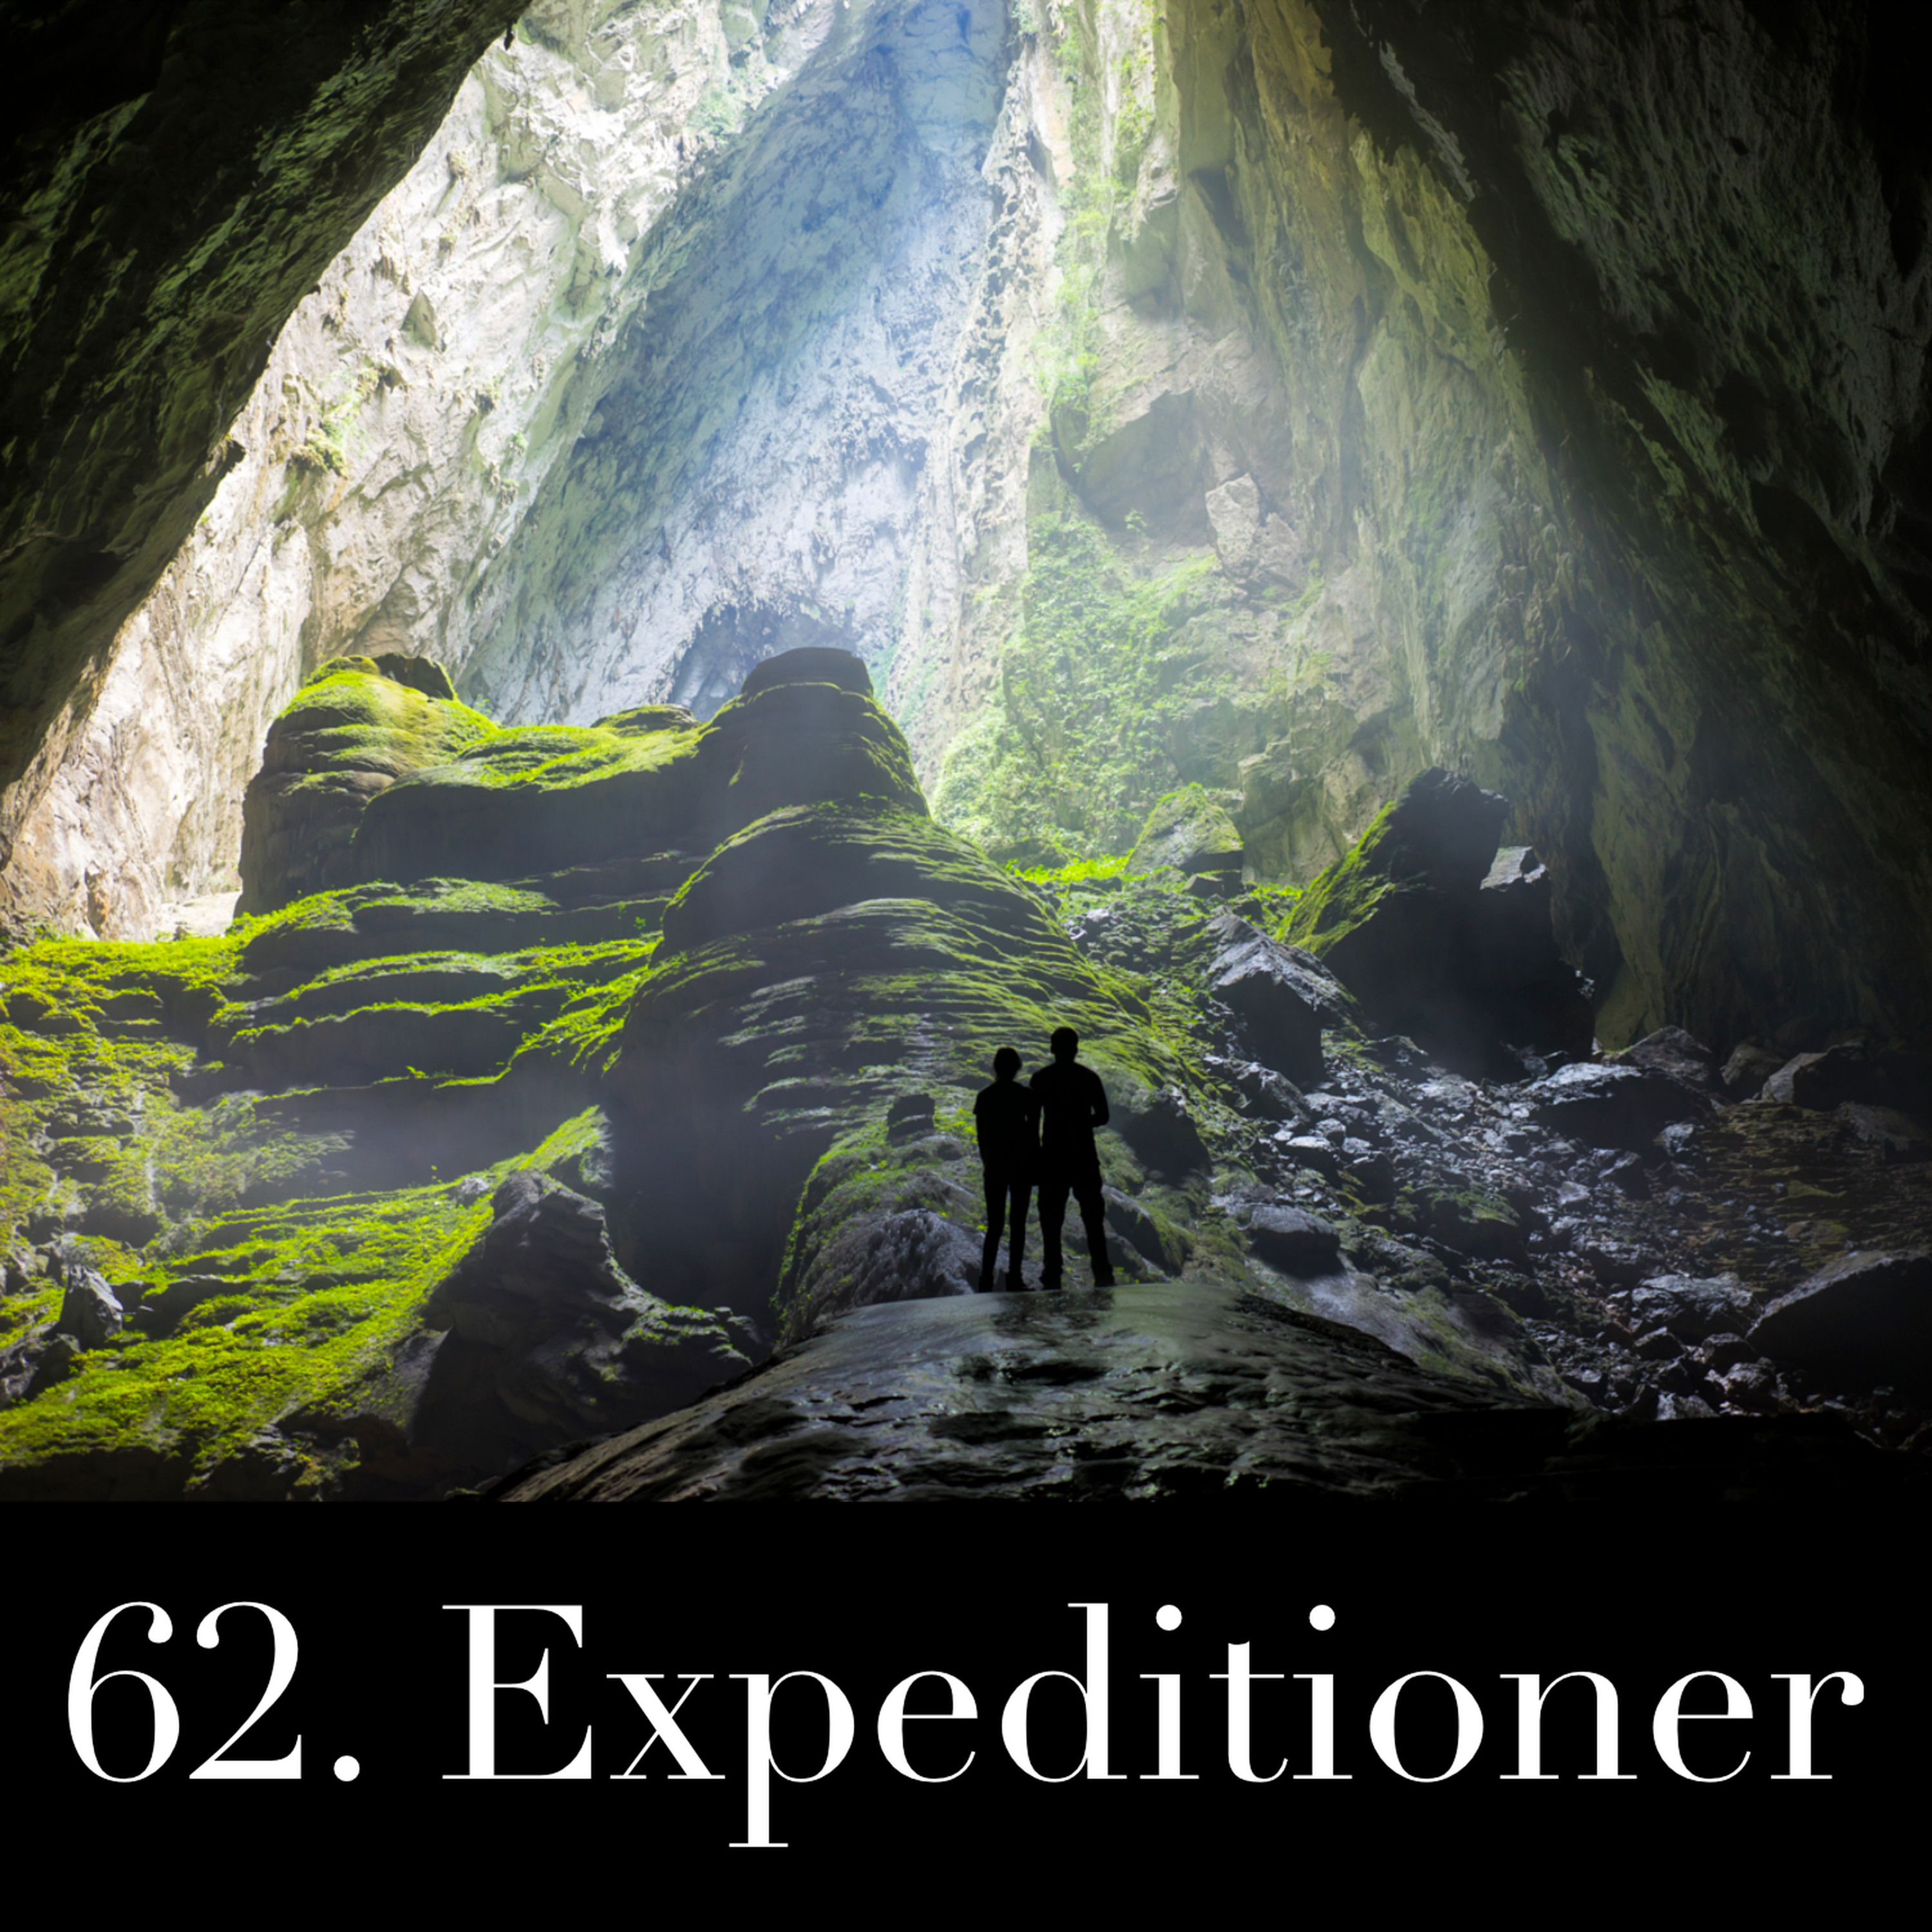 62. Expeditioner